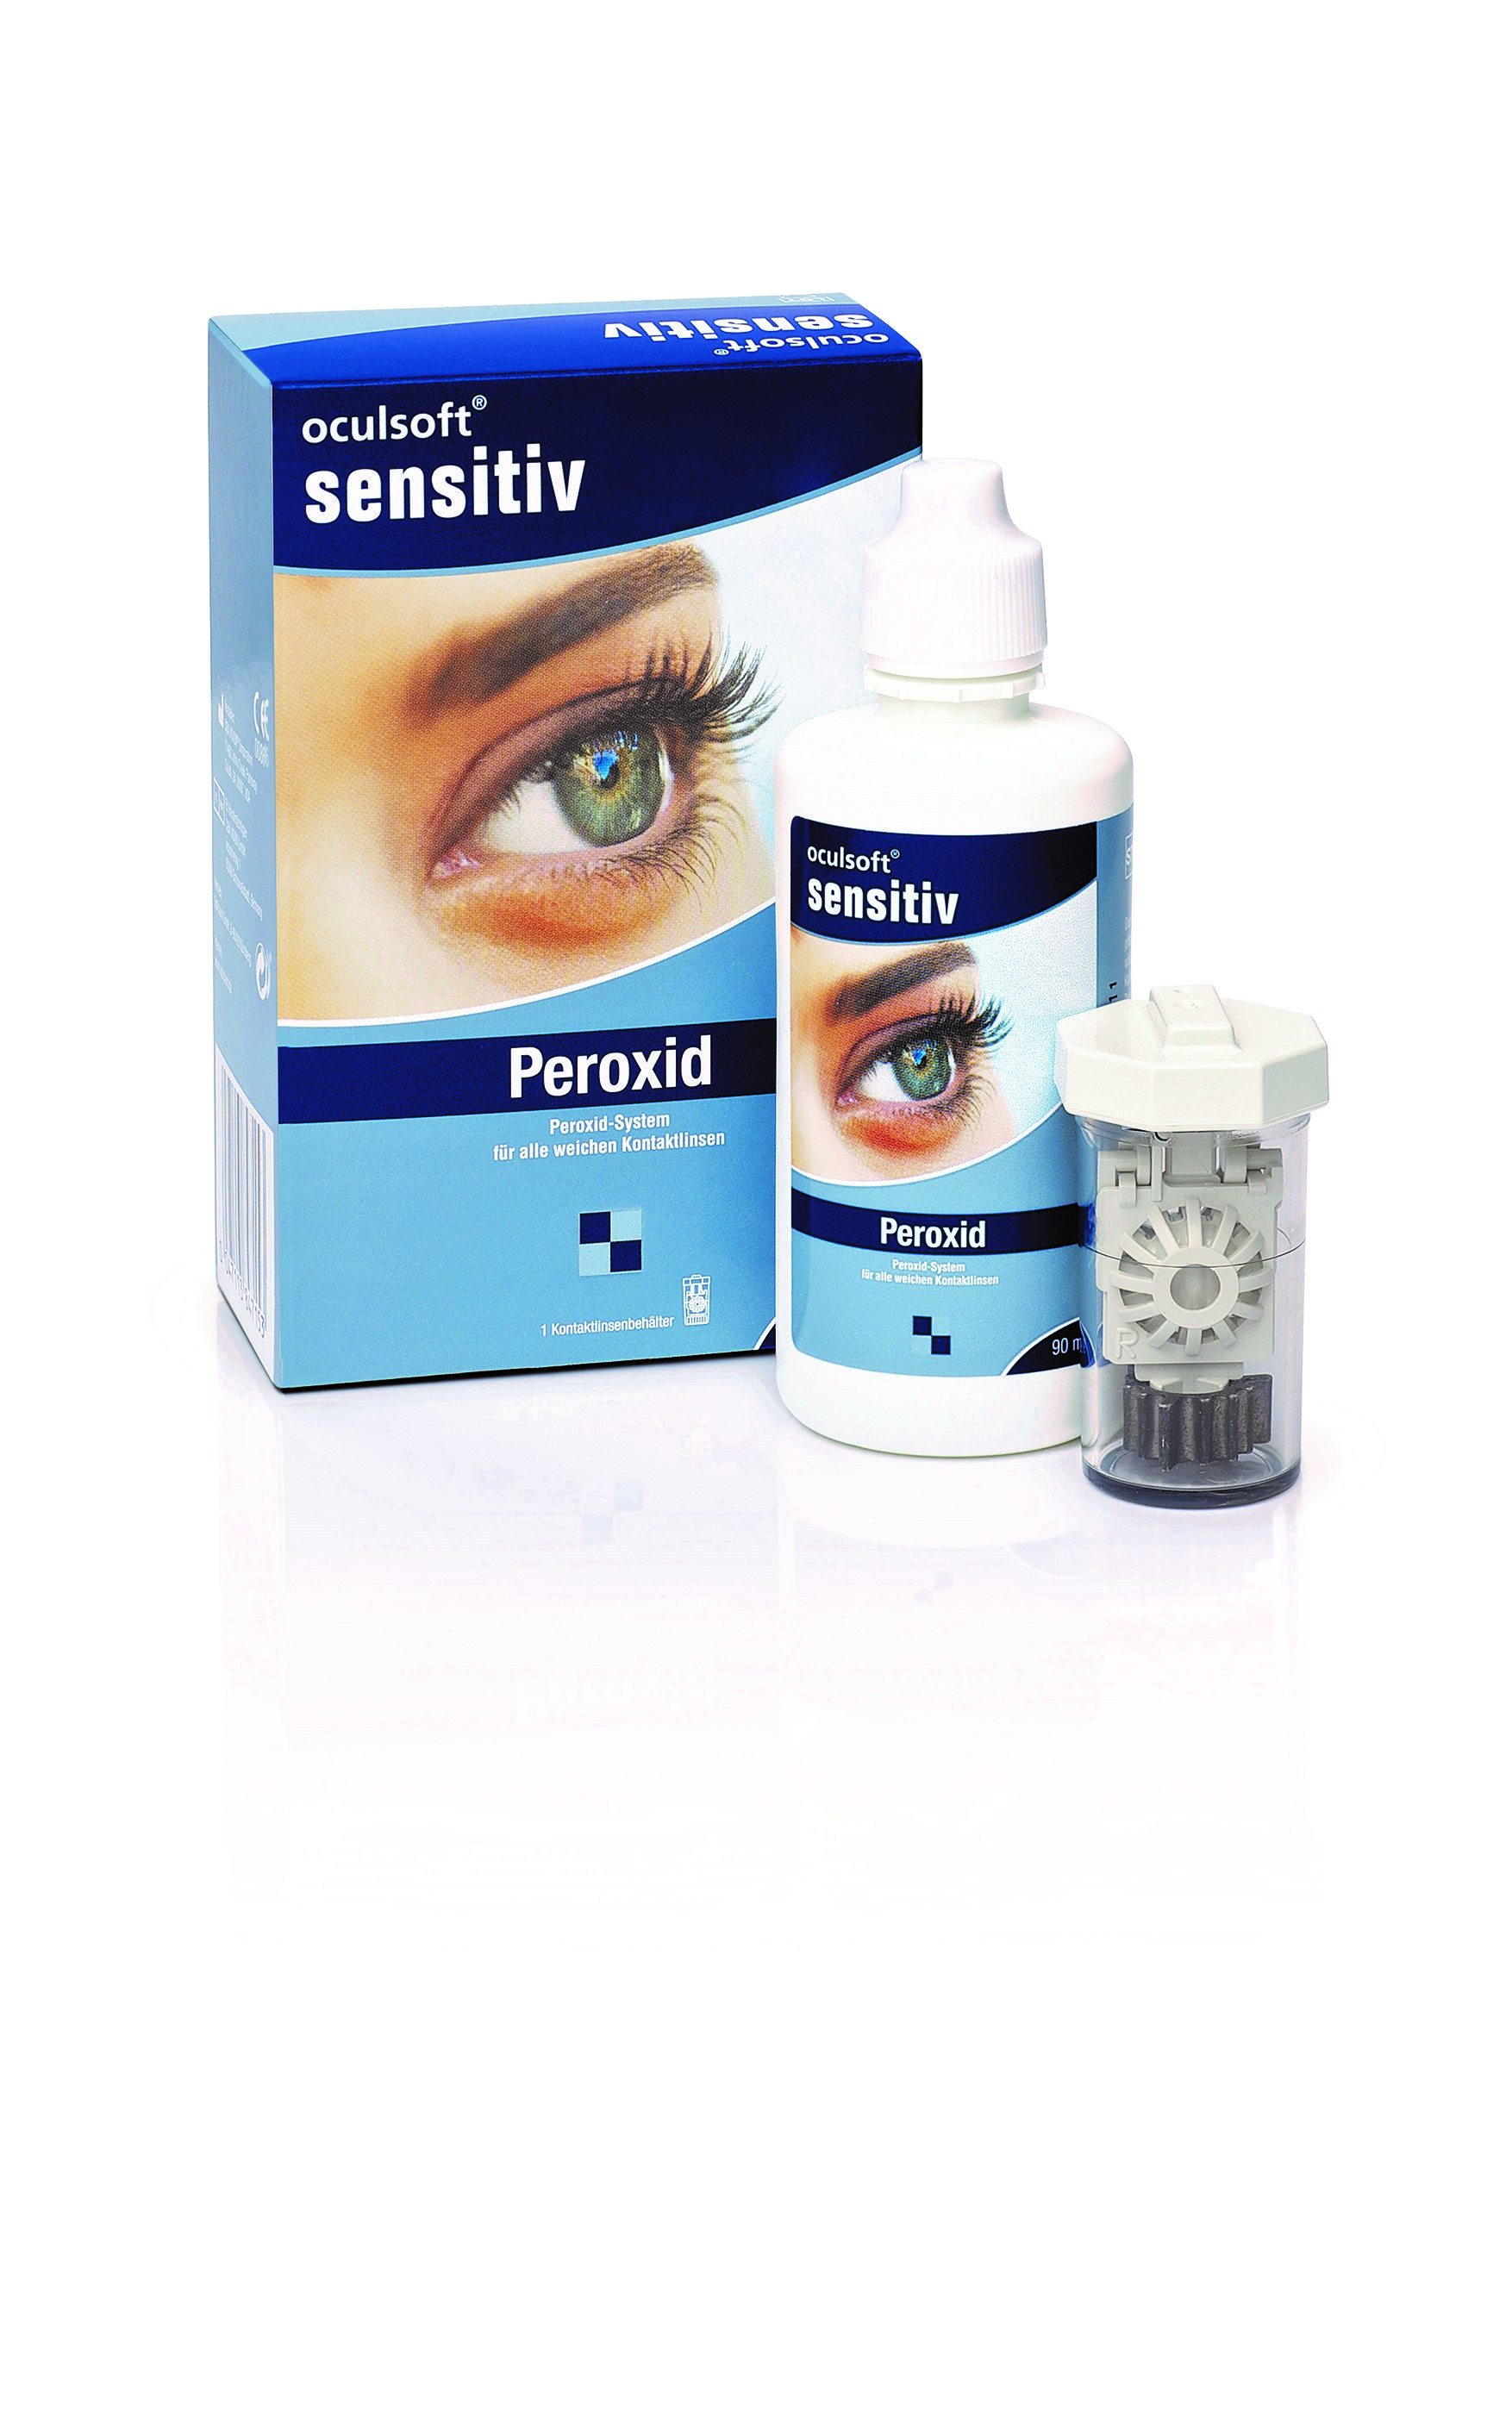 oculsoft sensitiv Peroxid (AOSept Plus)- 90 ml